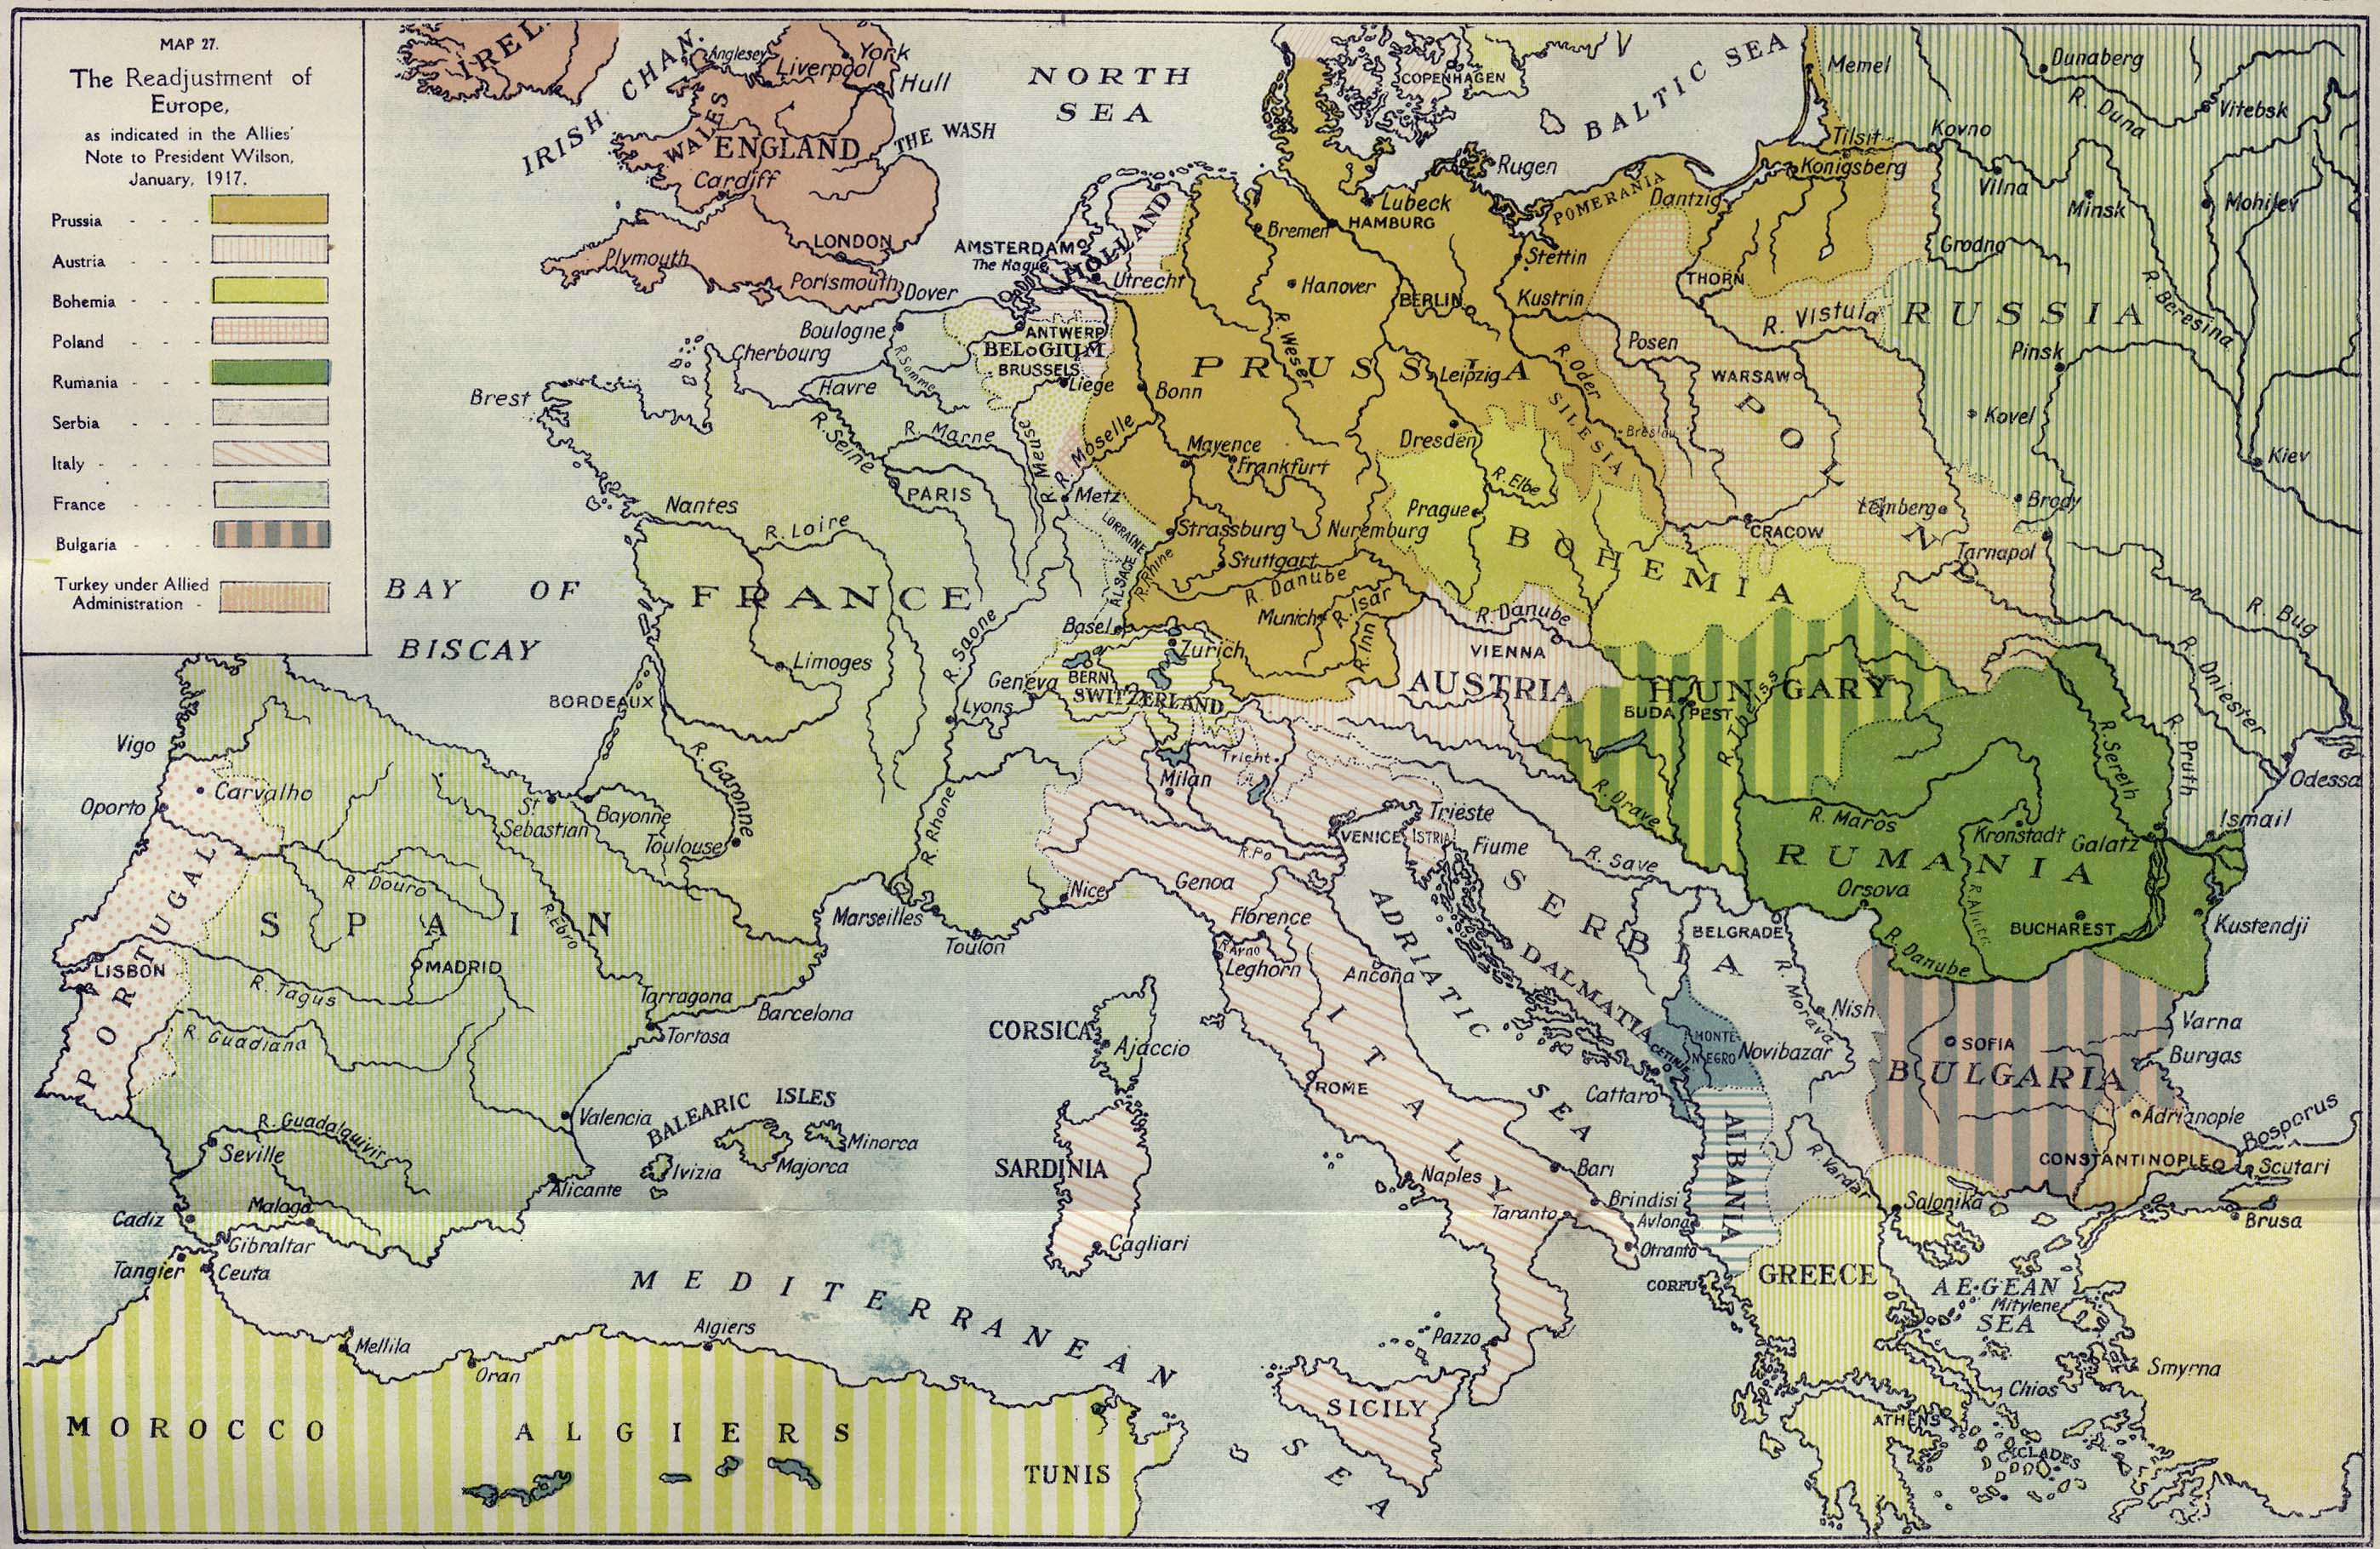 europe_readj_map27_1917.jpg